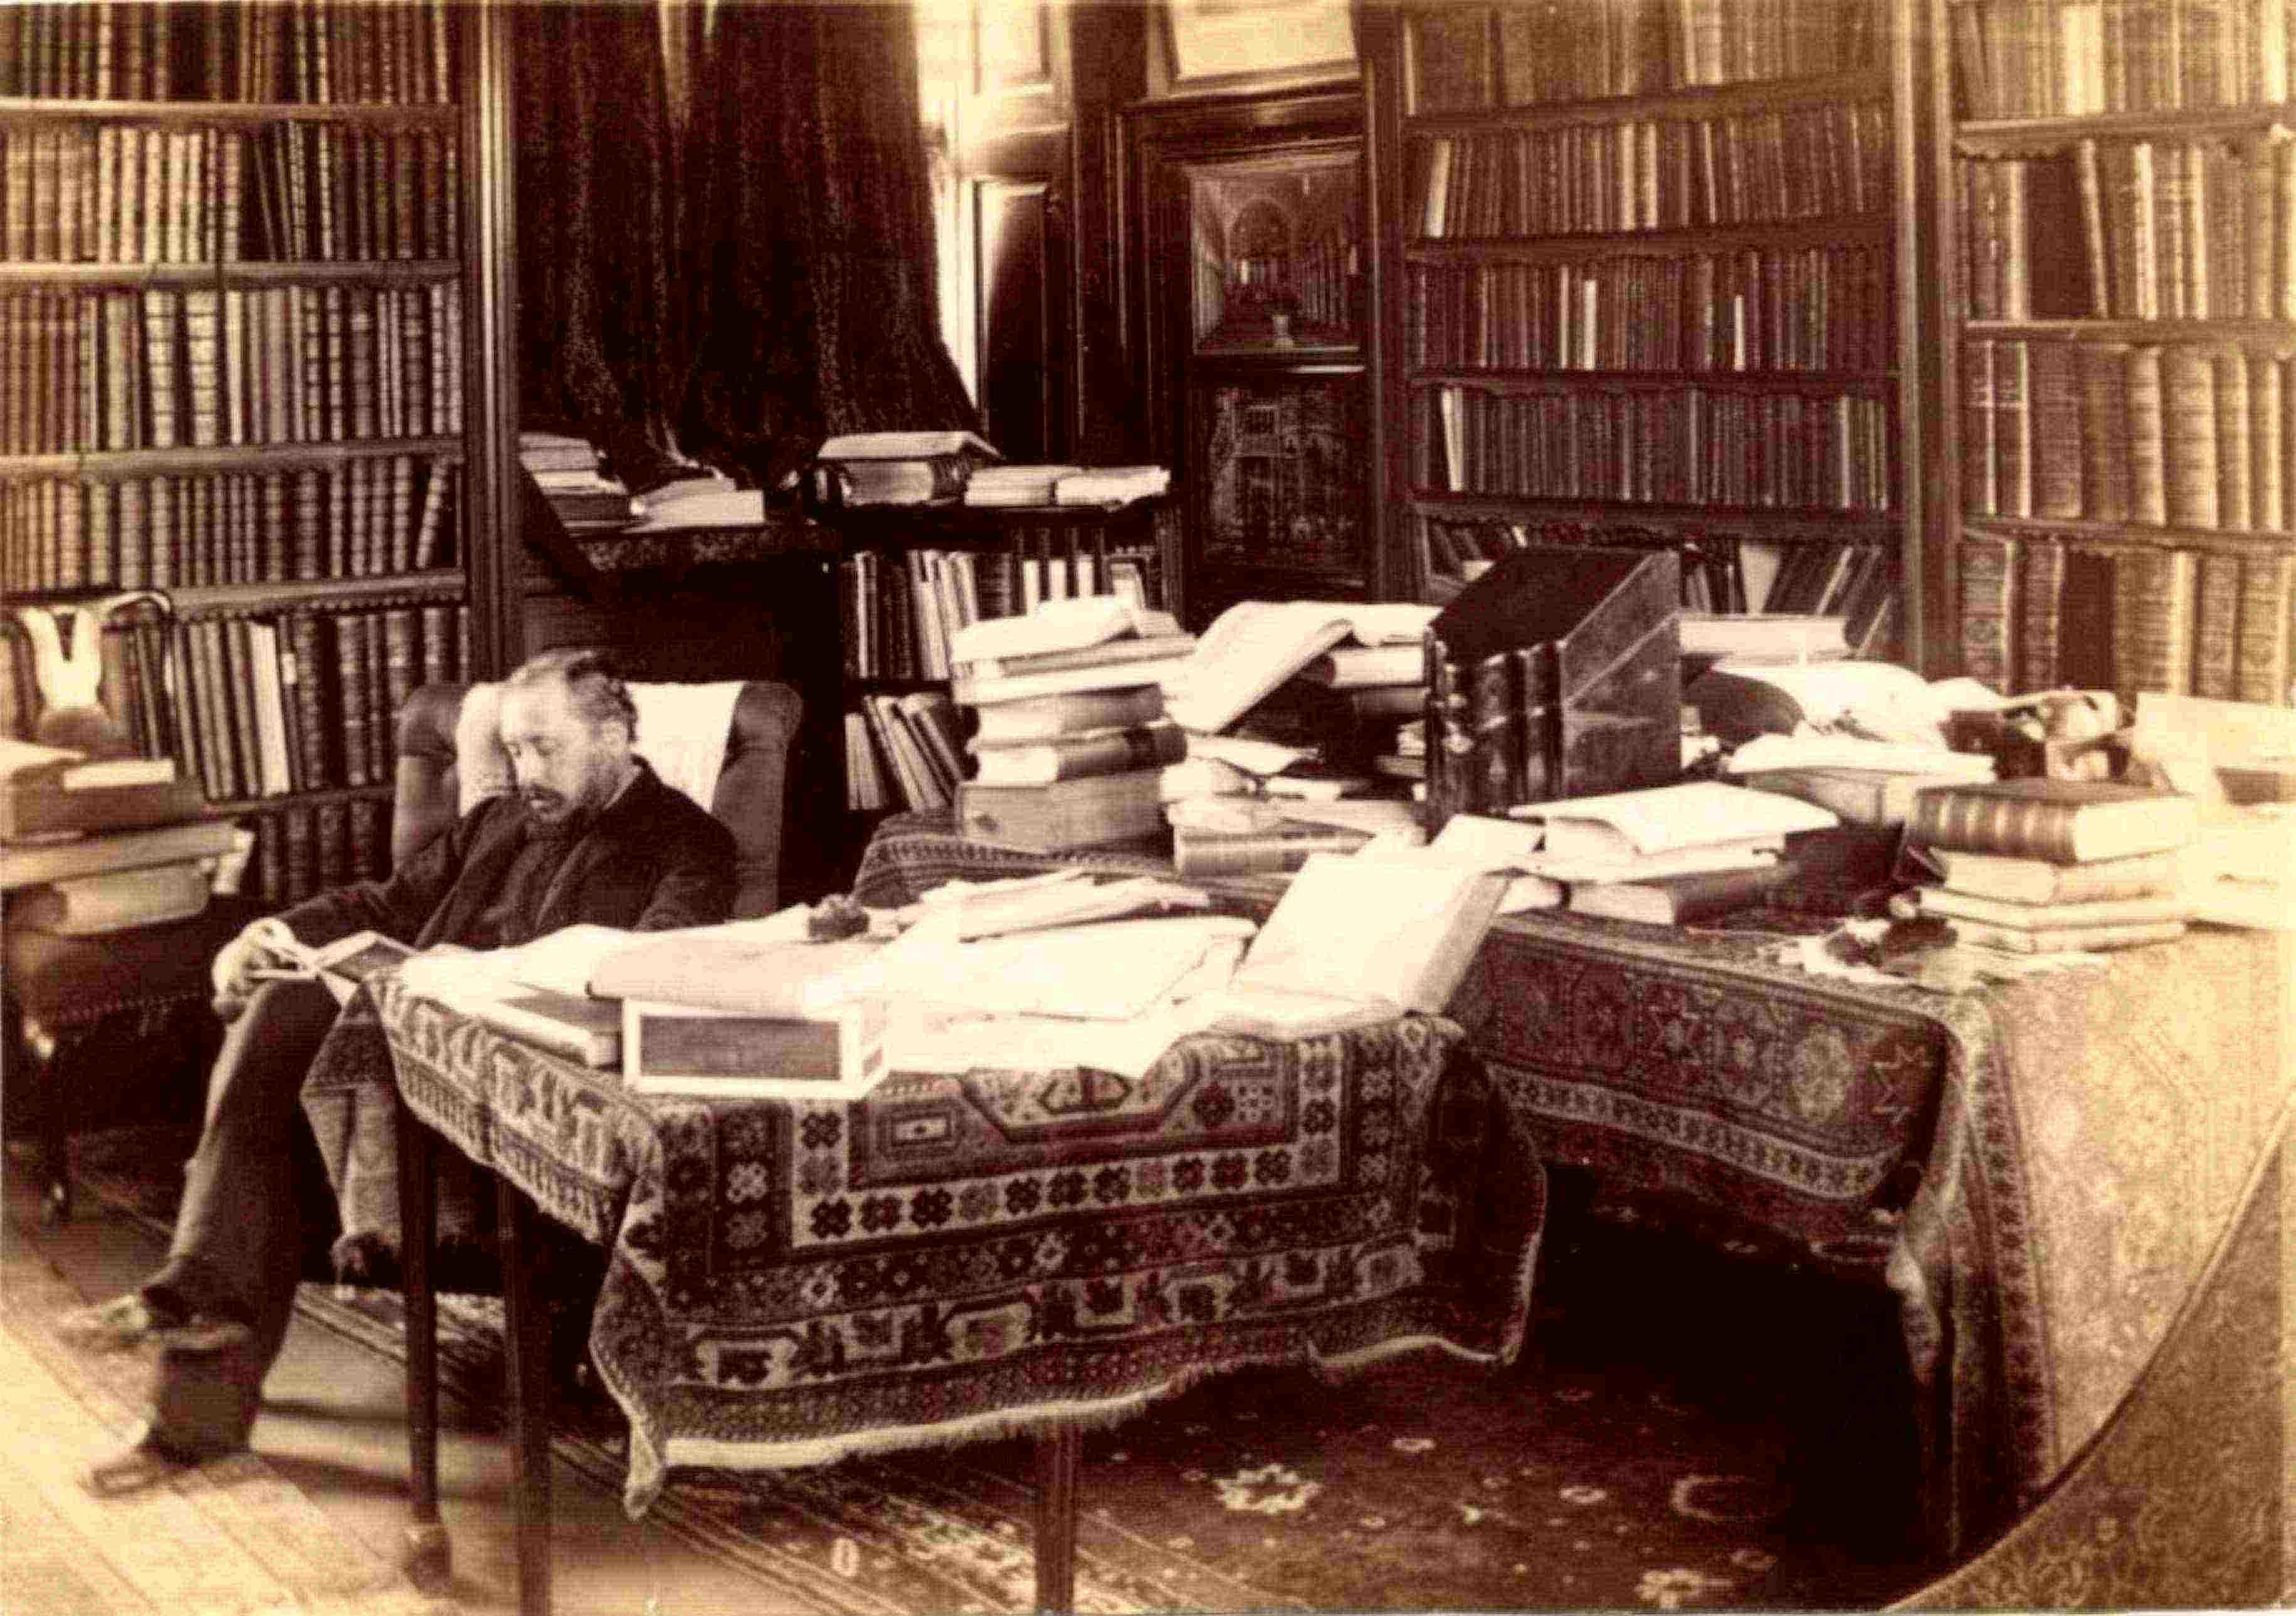 William Robertson Smith' study in Cambridge, ca. 1889, FP